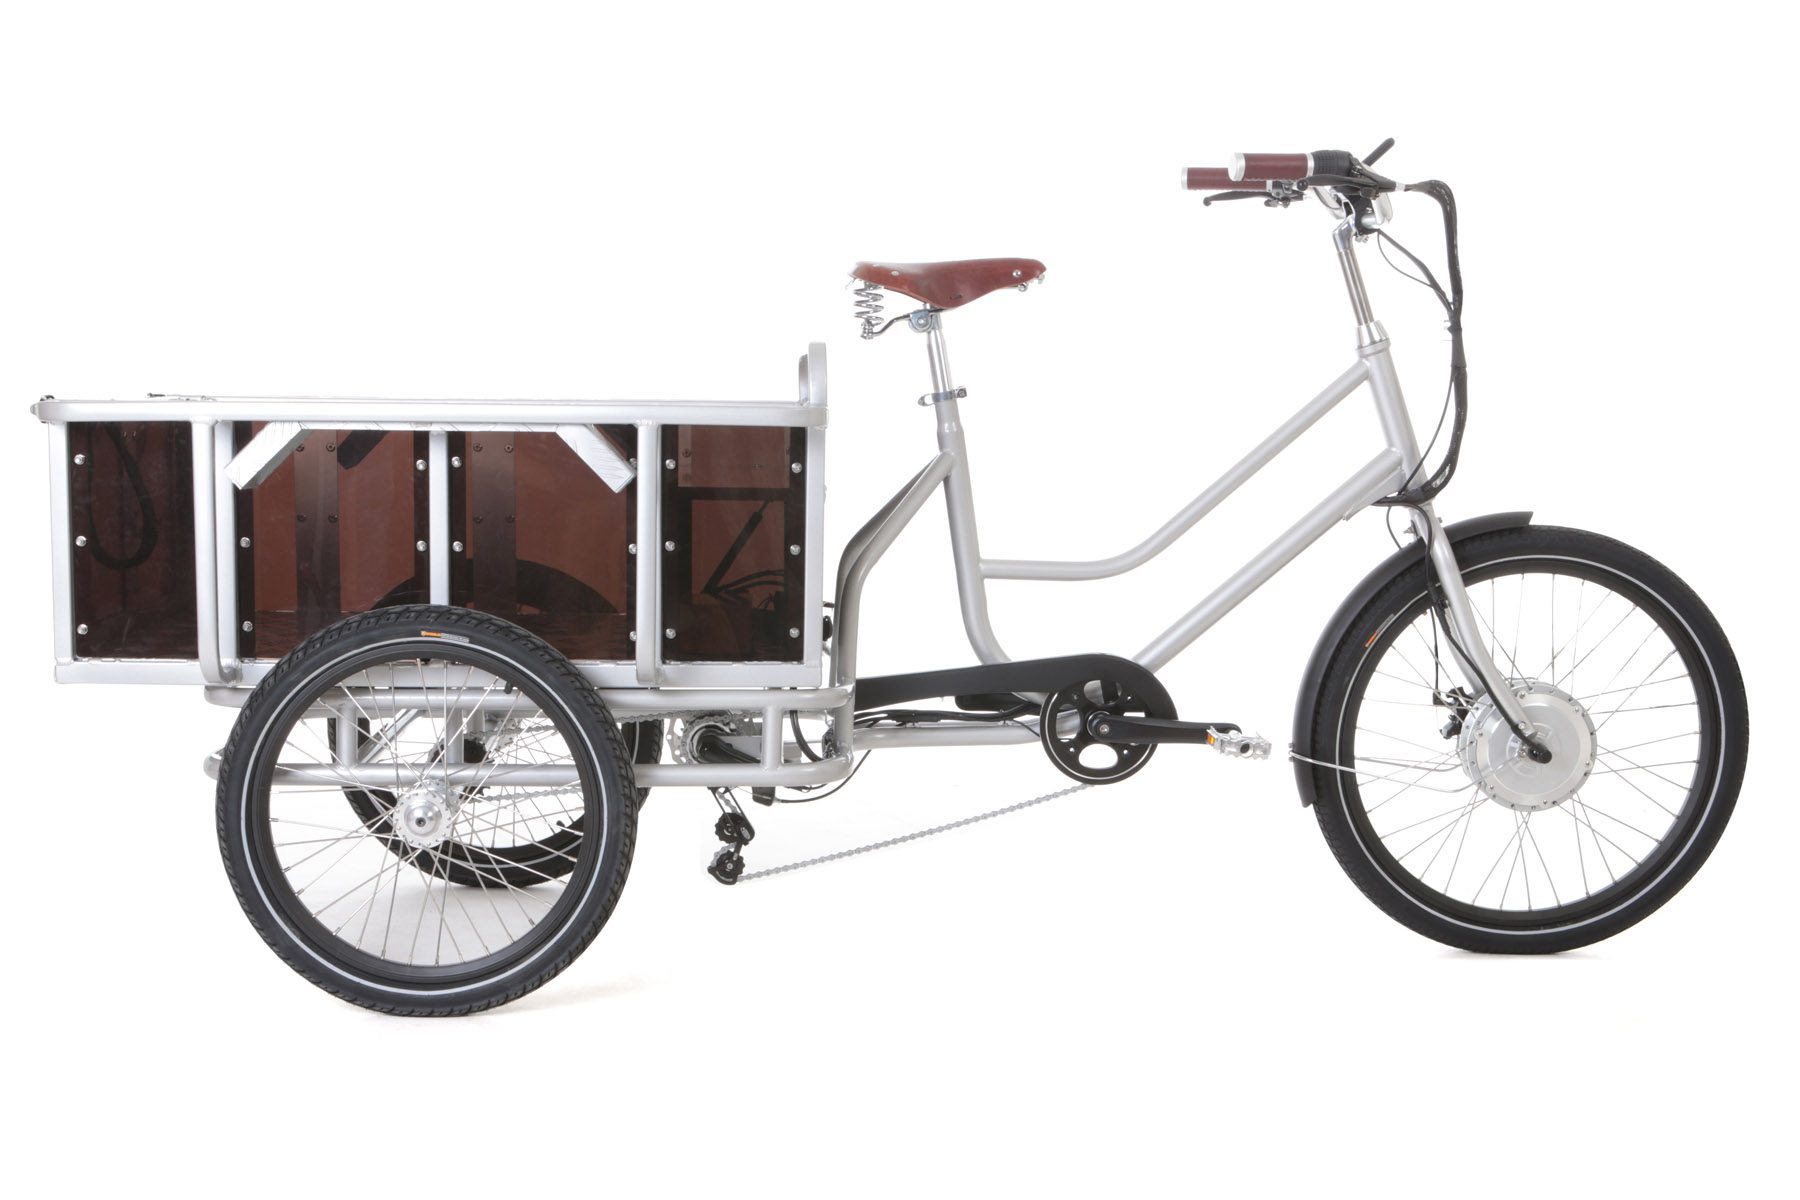 Bikes bikes трехколесный. Карго байк грузовой велосипед. Трехколесный электровелосипед карго 500w. Грузовой велосипед ИЖ карго. Трехколесный электровелосипед e-Motions Kangoo-ru 500w.